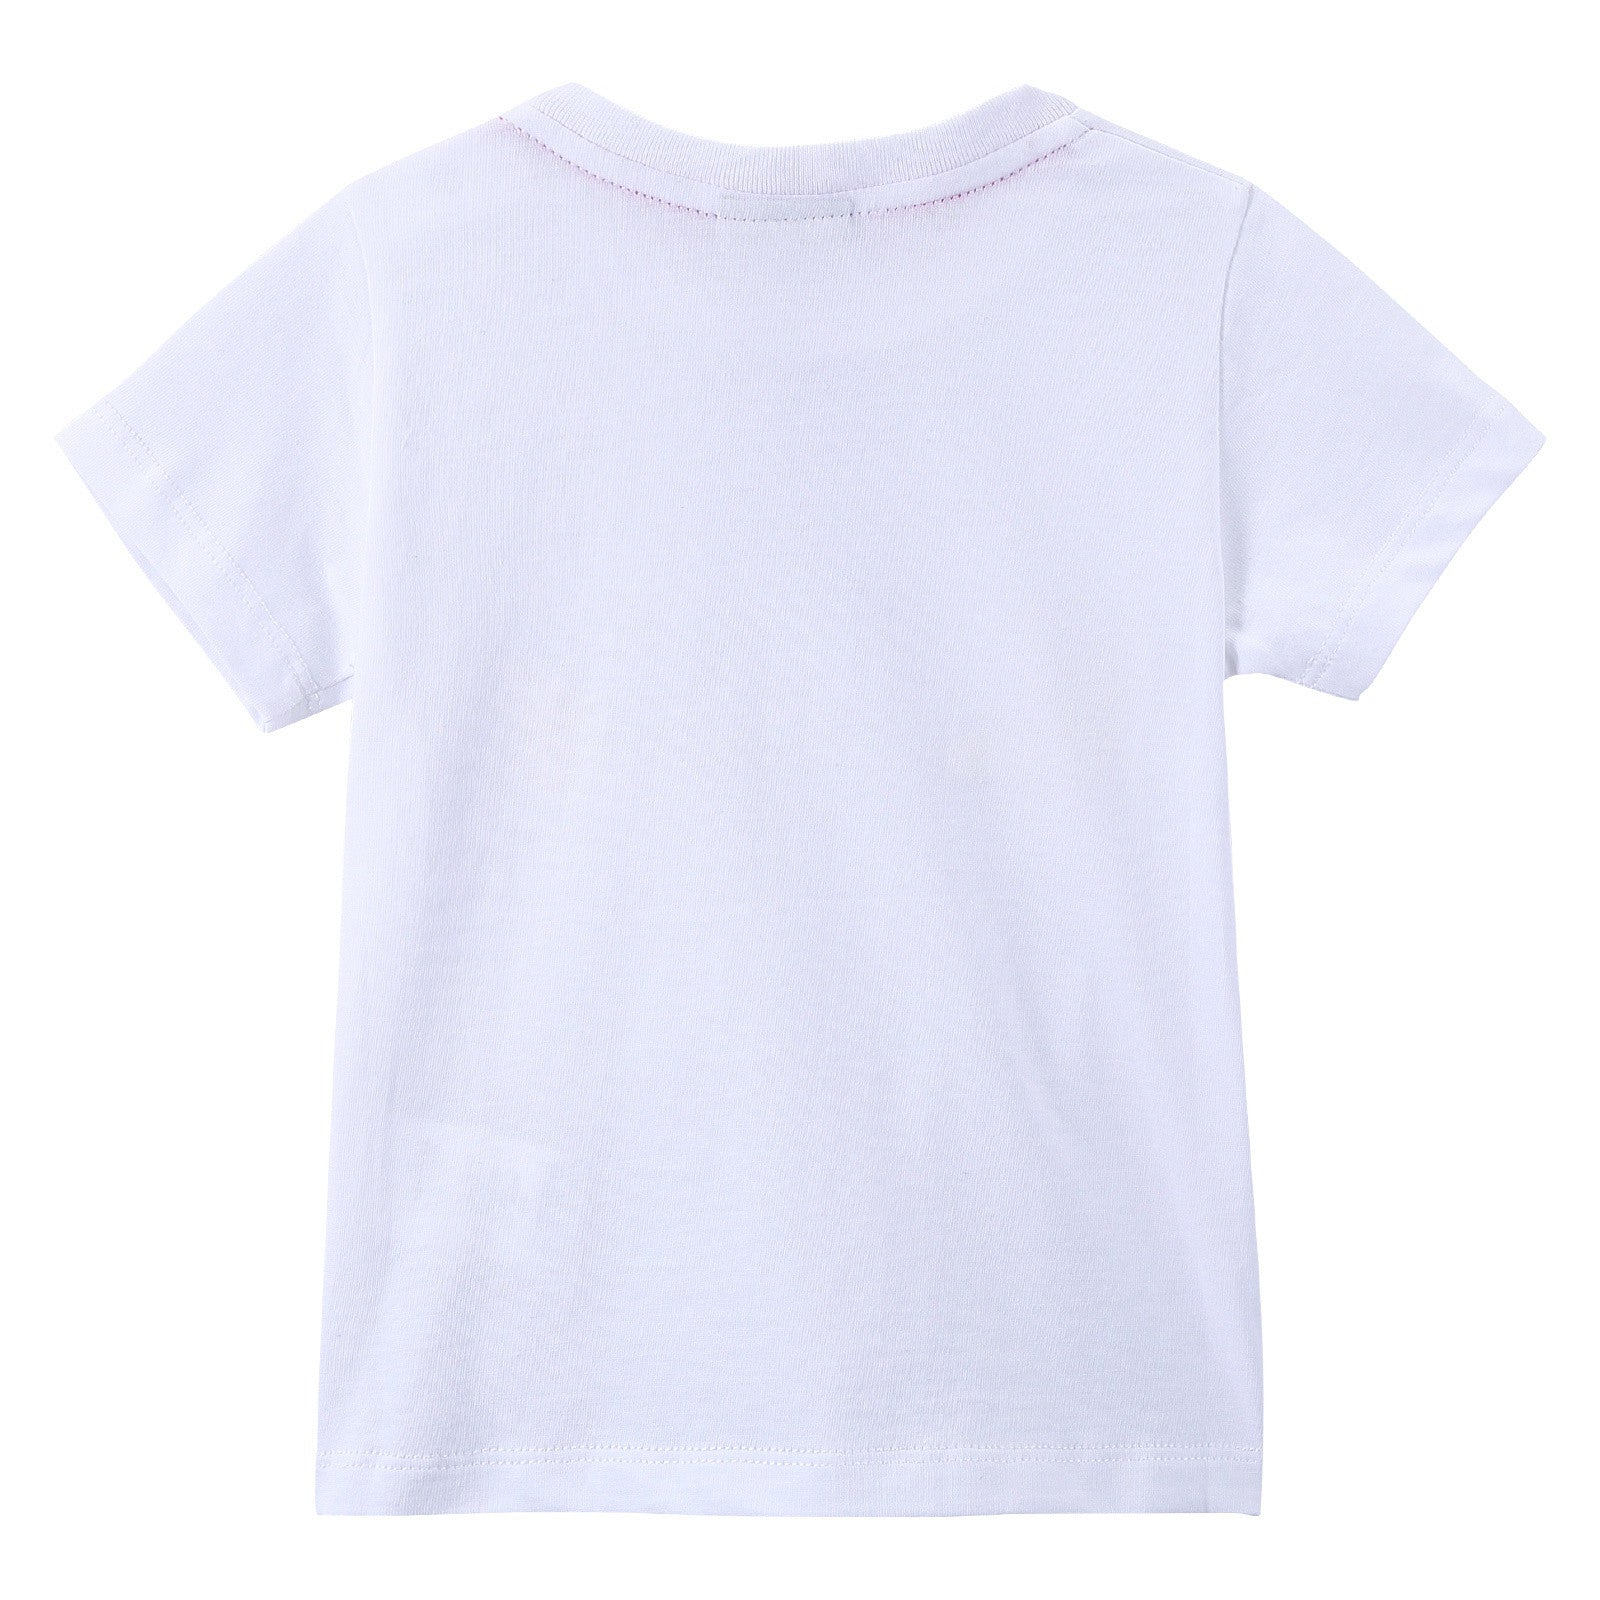 Baby Boys White Cotton 'Monster' Printed T-Shirt - CÉMAROSE | Children's Fashion Store - 2